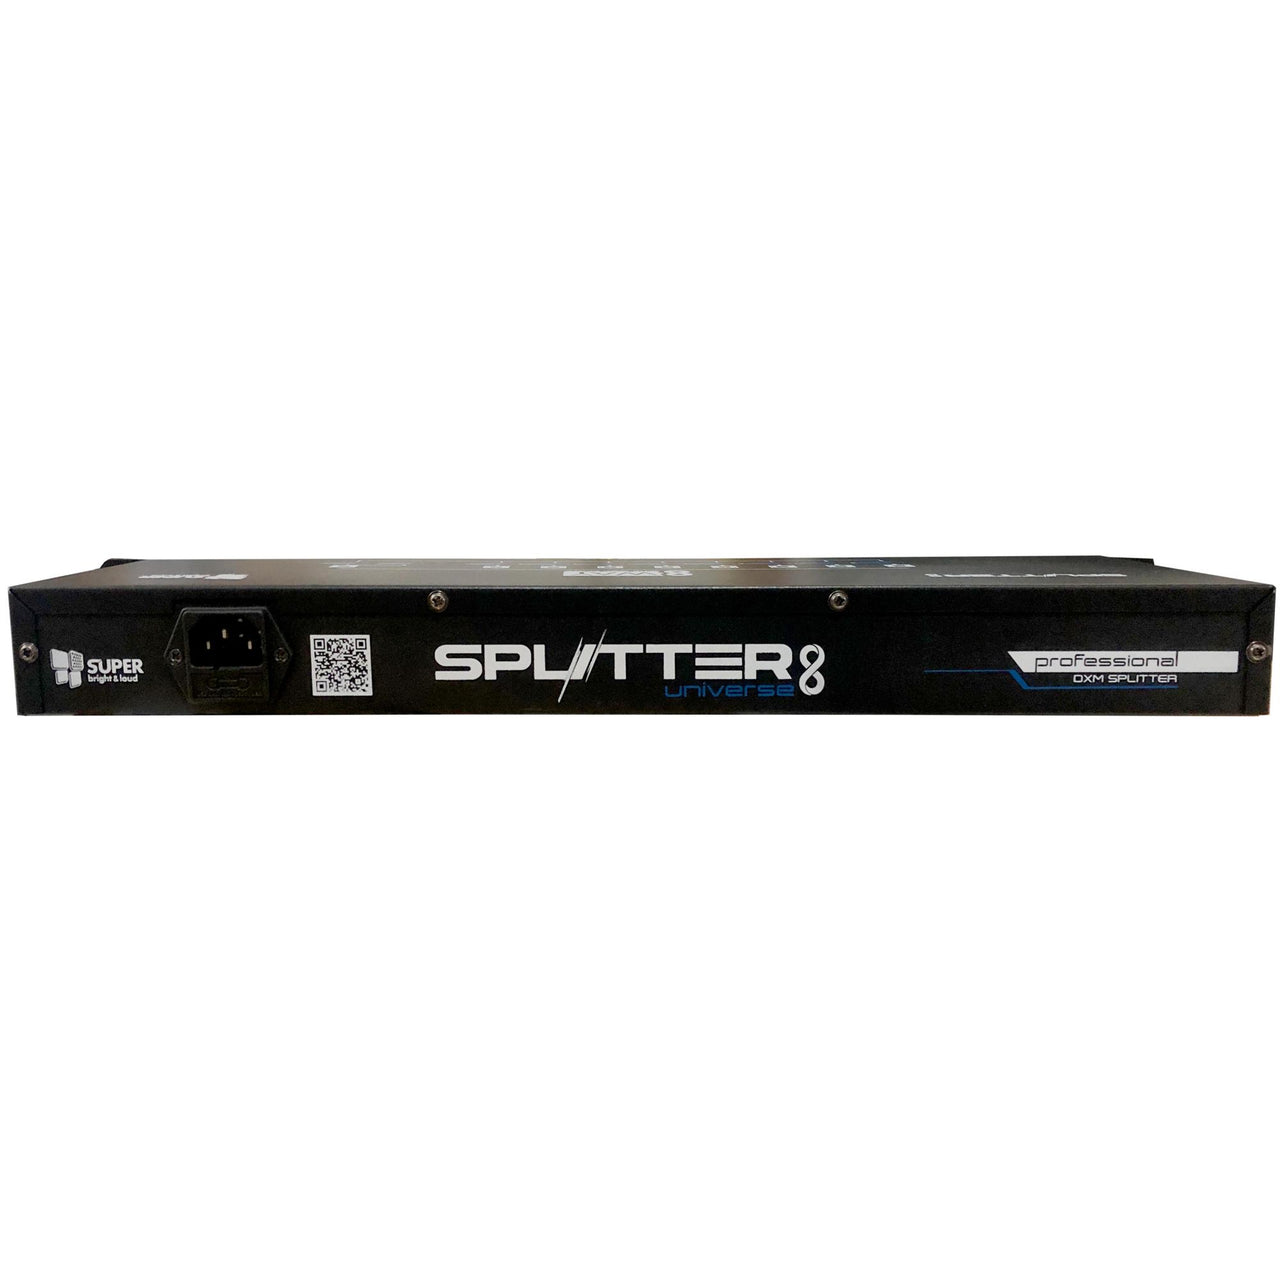 Splitter Dmx Super bright Universe8 Para Rack 1 Entrada 8 Salidas